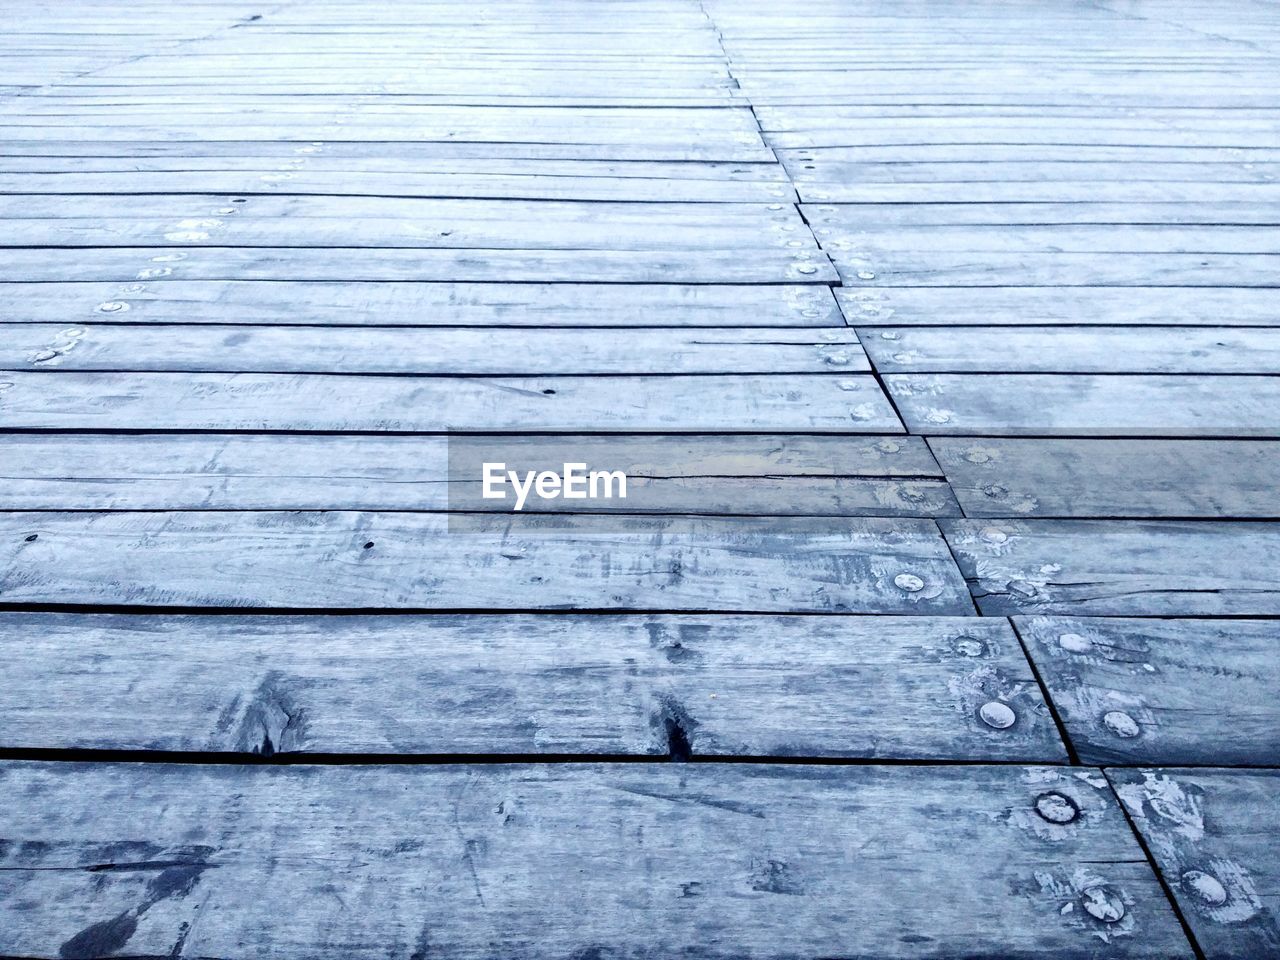 Surface level shot of wooden planks on floor